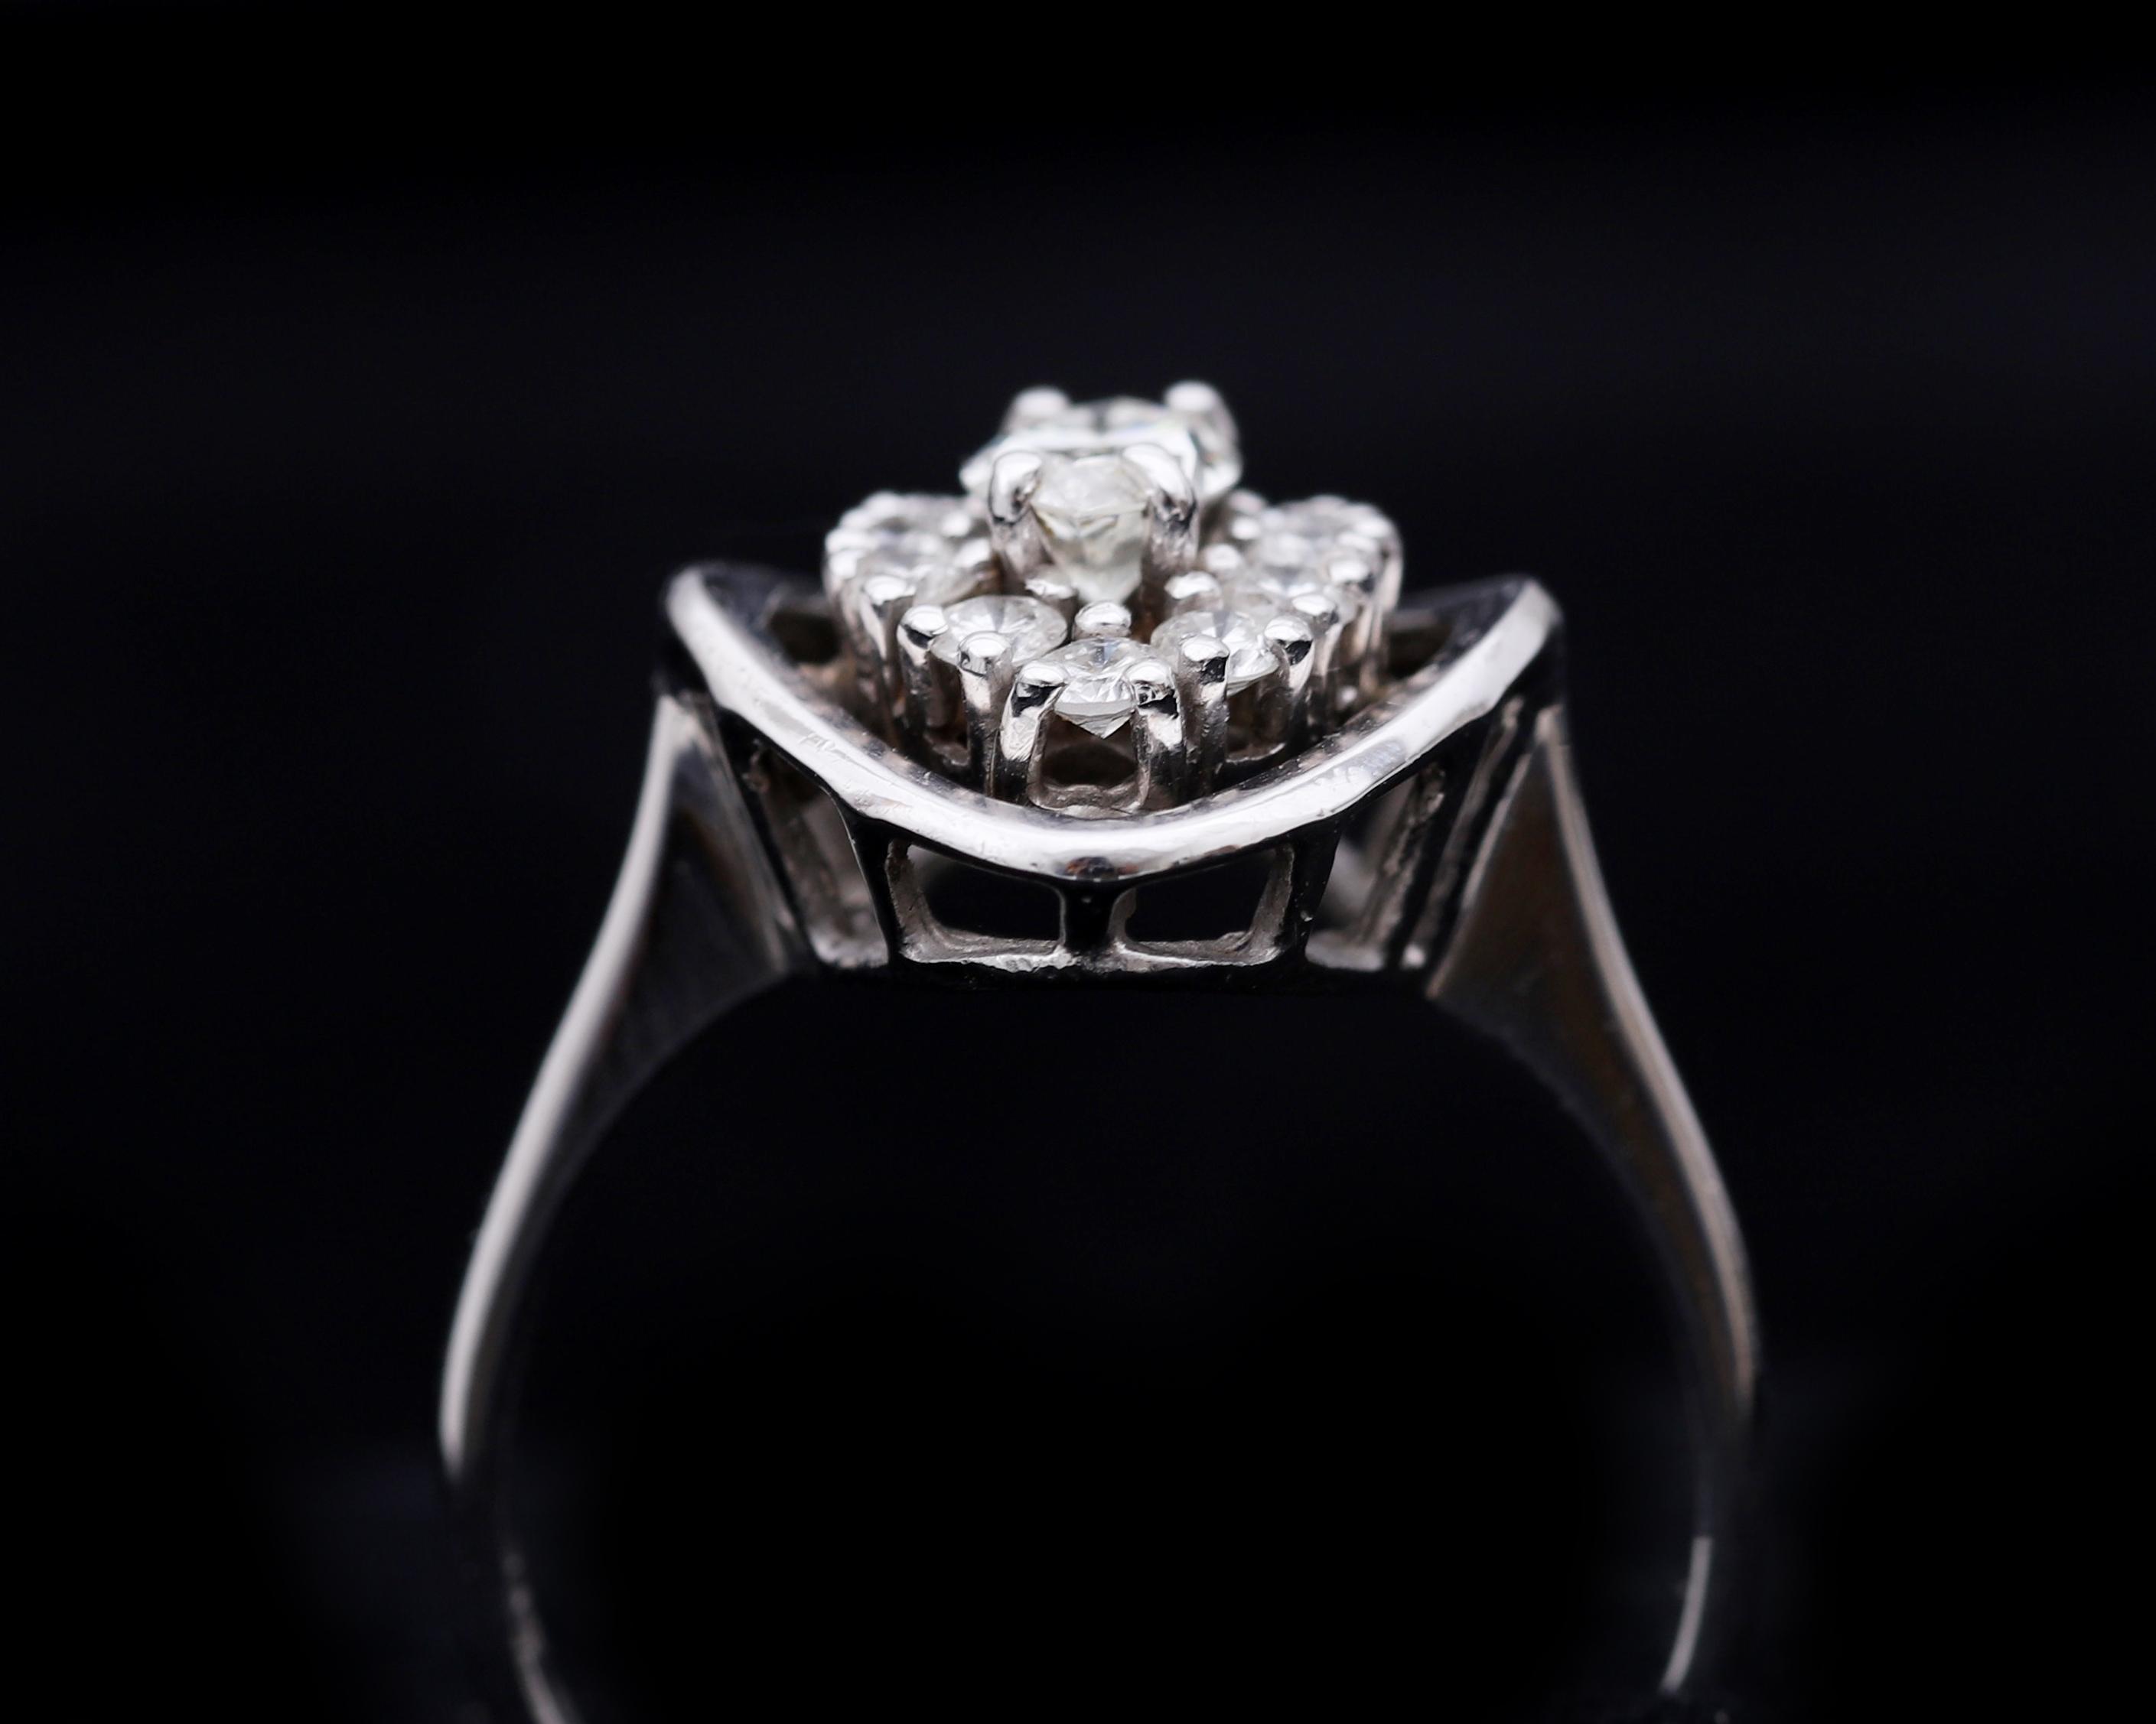 A 14 karat white gold entourage ring in art deco style set with diamonds - Image 4 of 4